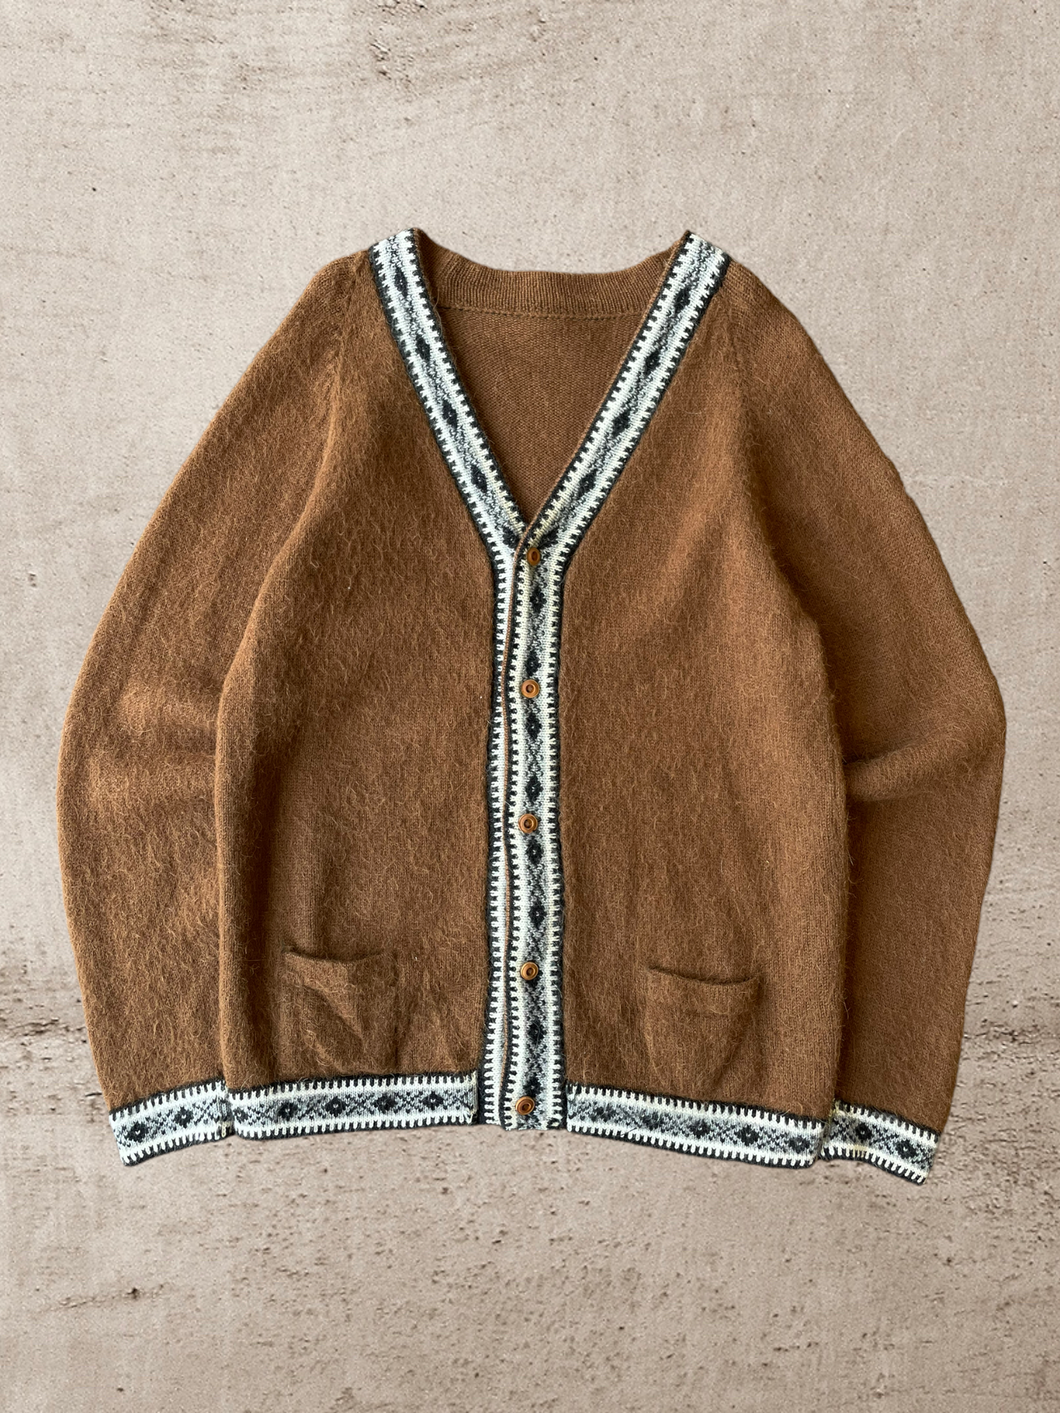 Vintage Knit Cardigan - Large